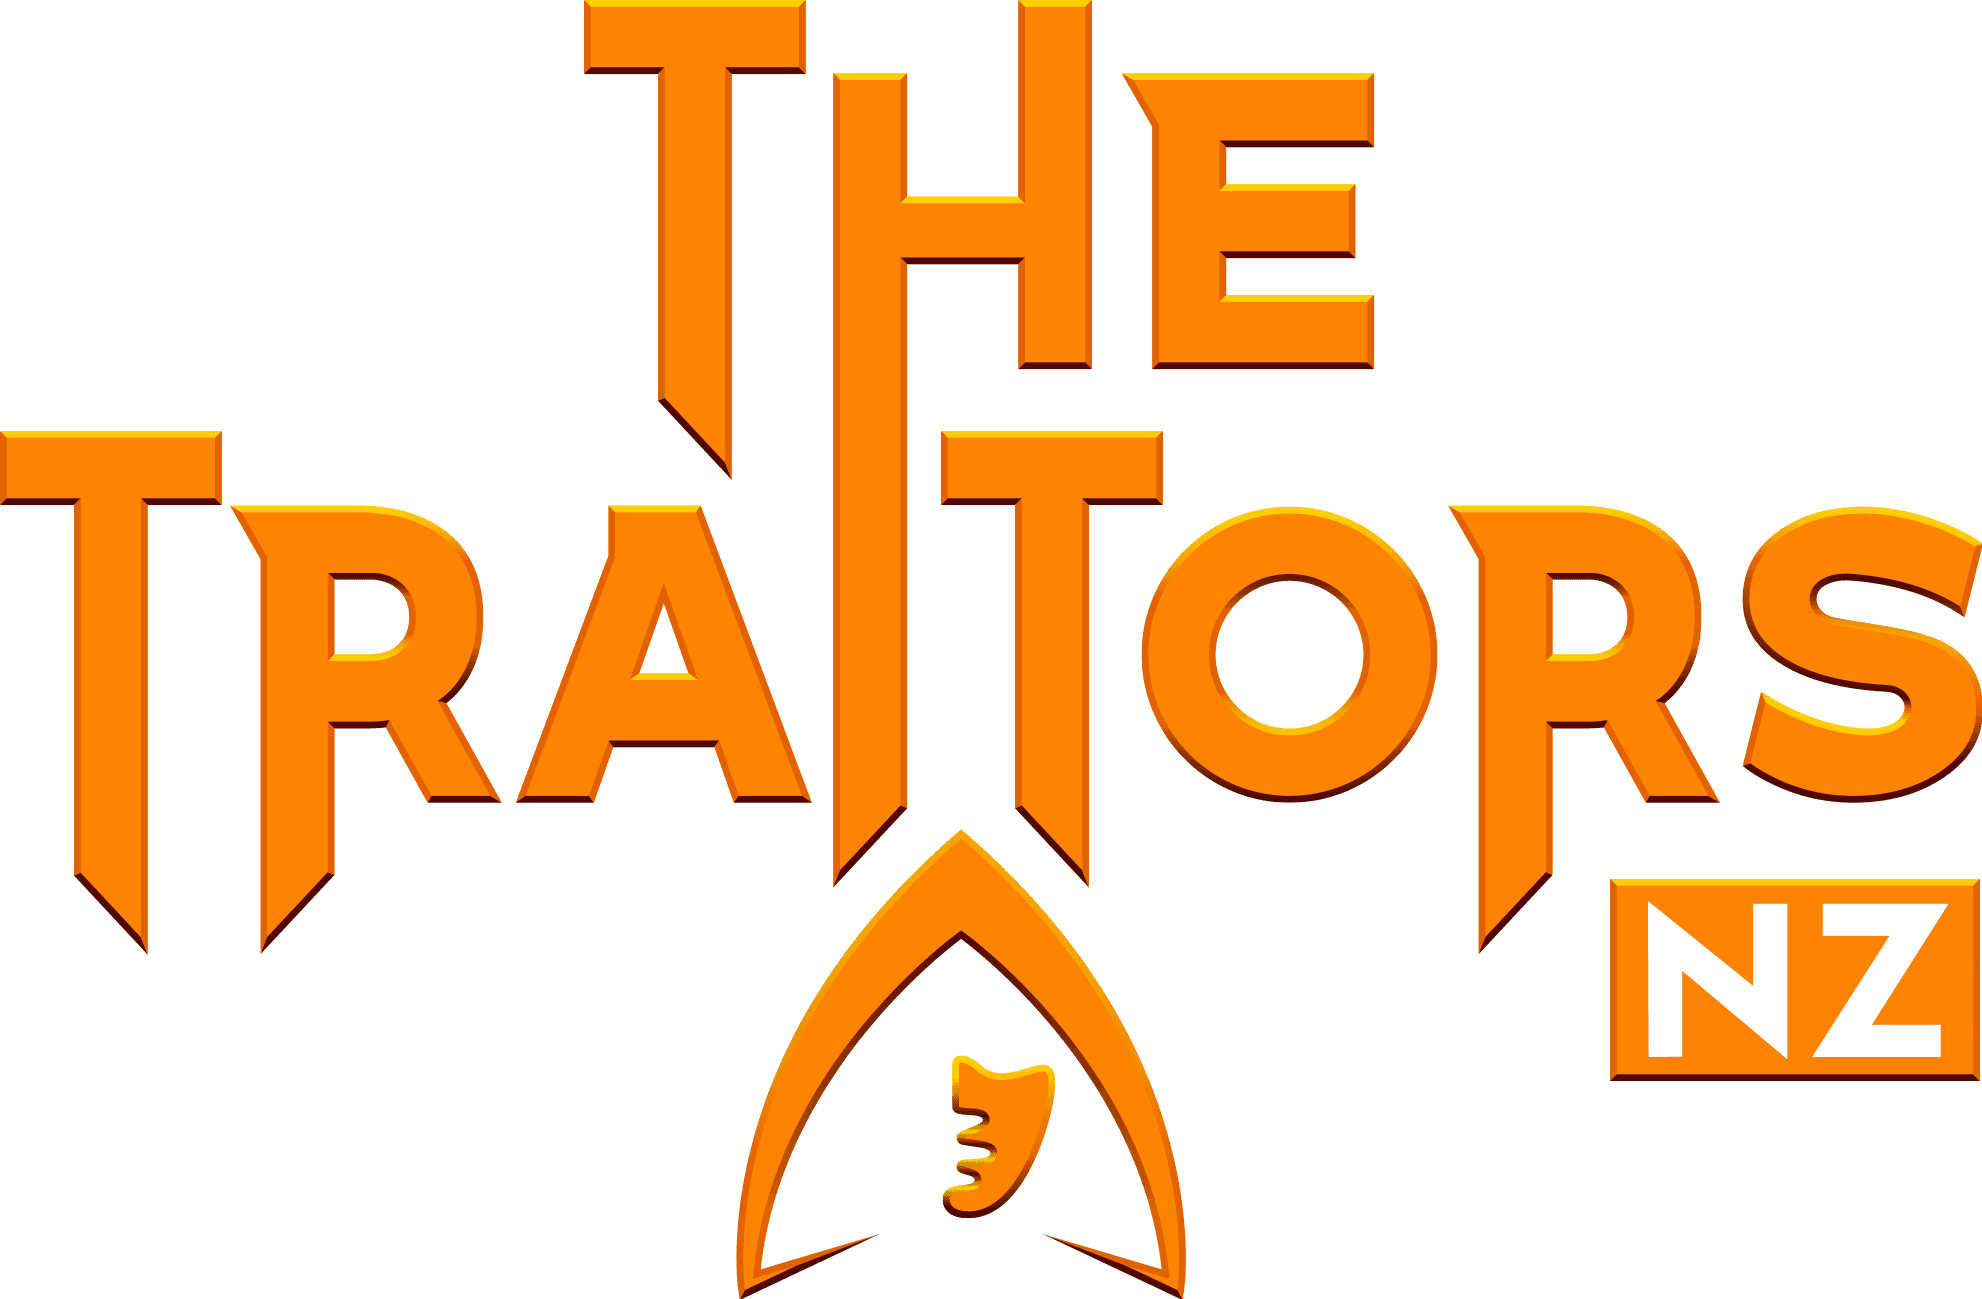 The Traitors NZ logo